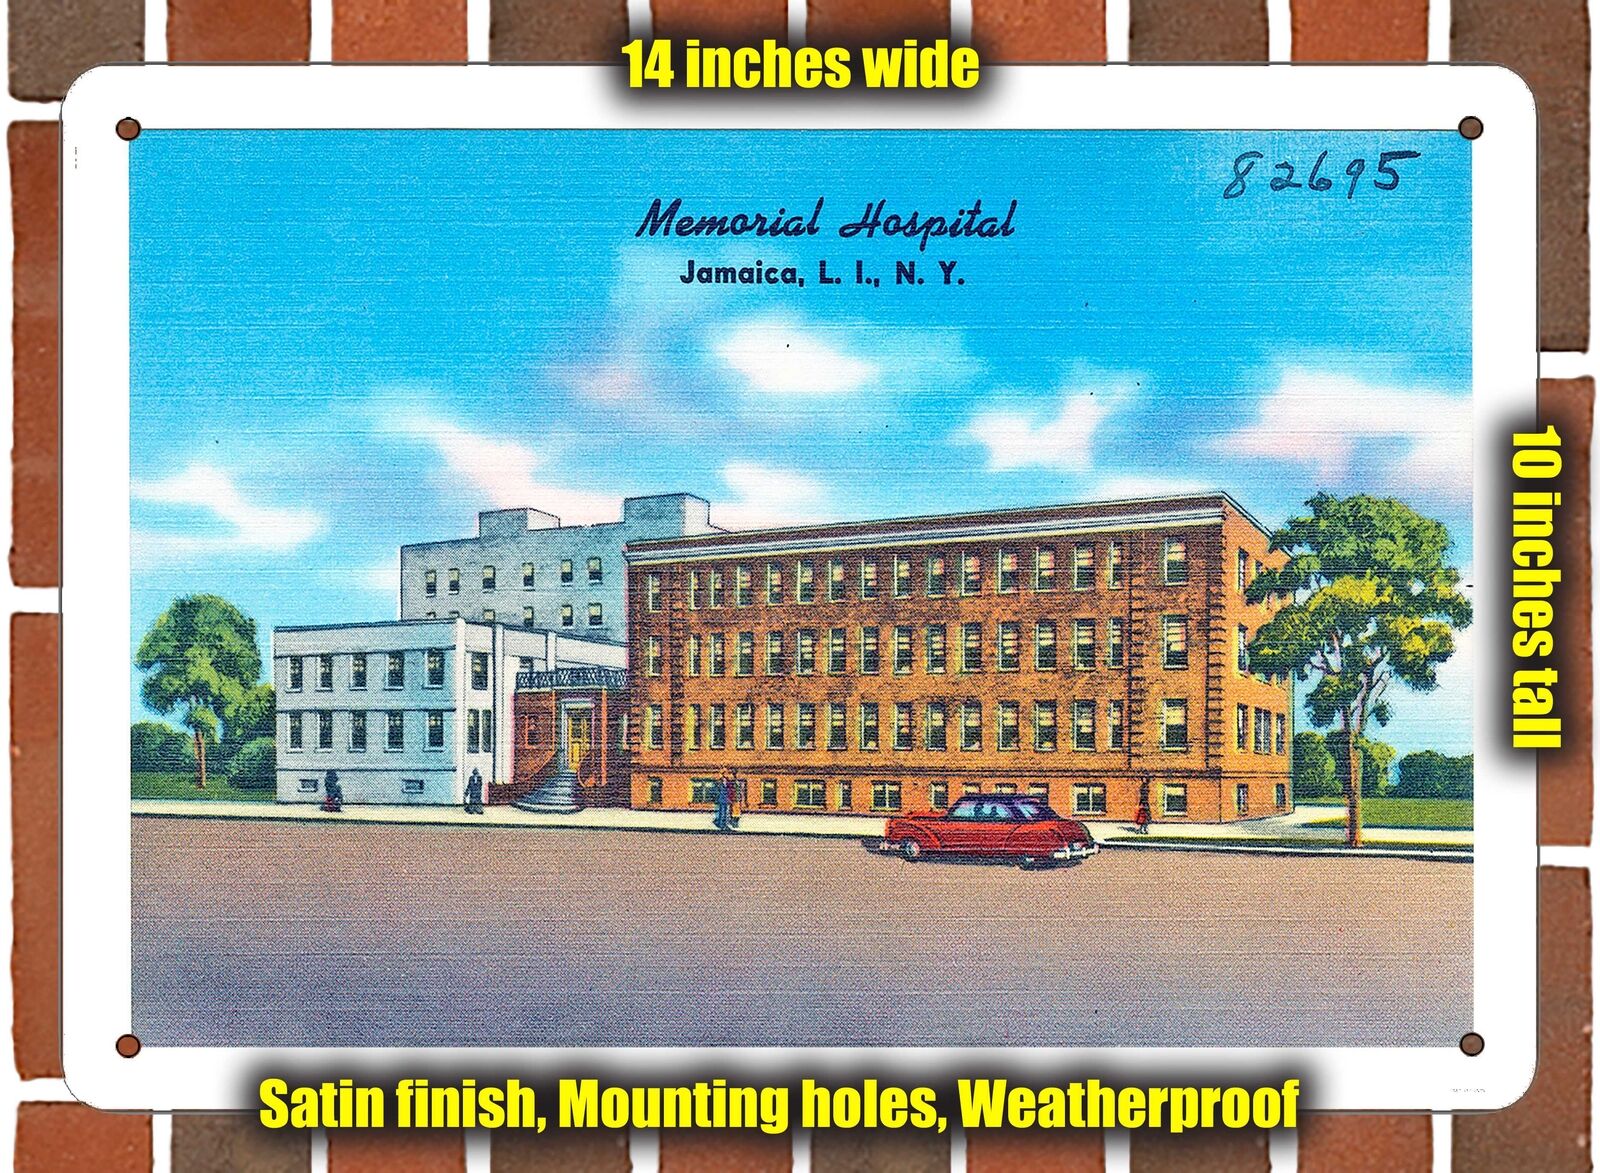 METAL SIGN - New York Postcard - Memorial Hospital, Jamaica, L. I., N. Y.